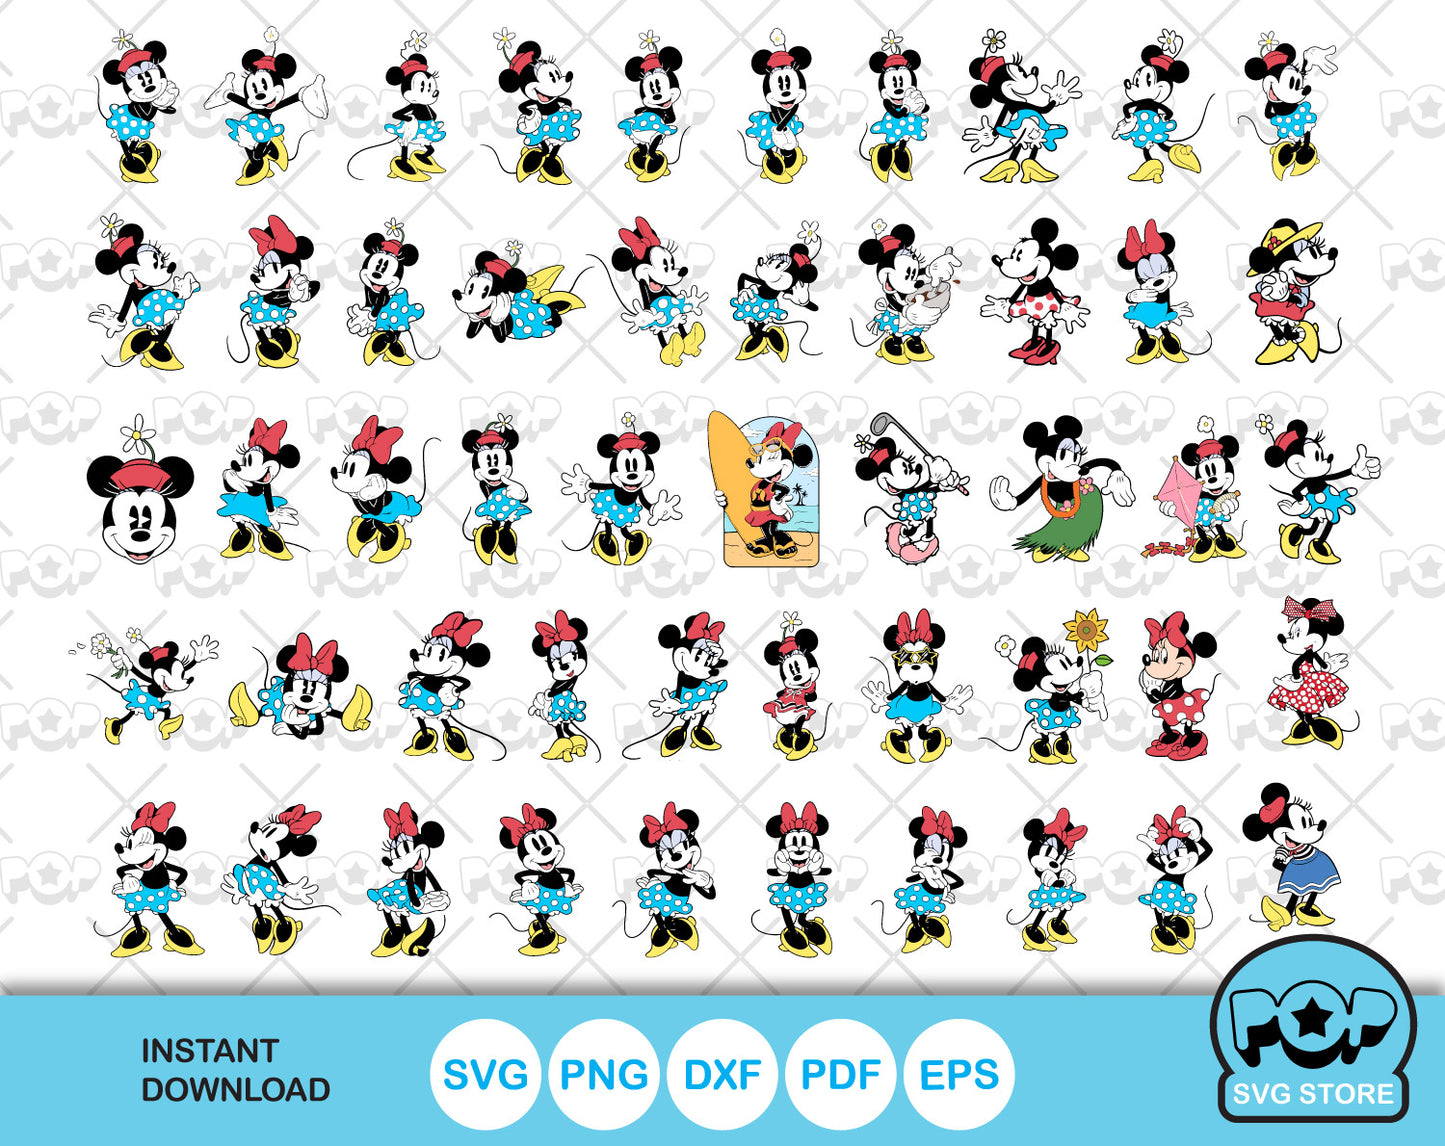 Classic Minnie Mouse 100 cliparts bundle, Minnie svg cut files for Cricut / Silhouette, Minnie Mouse png, dxf